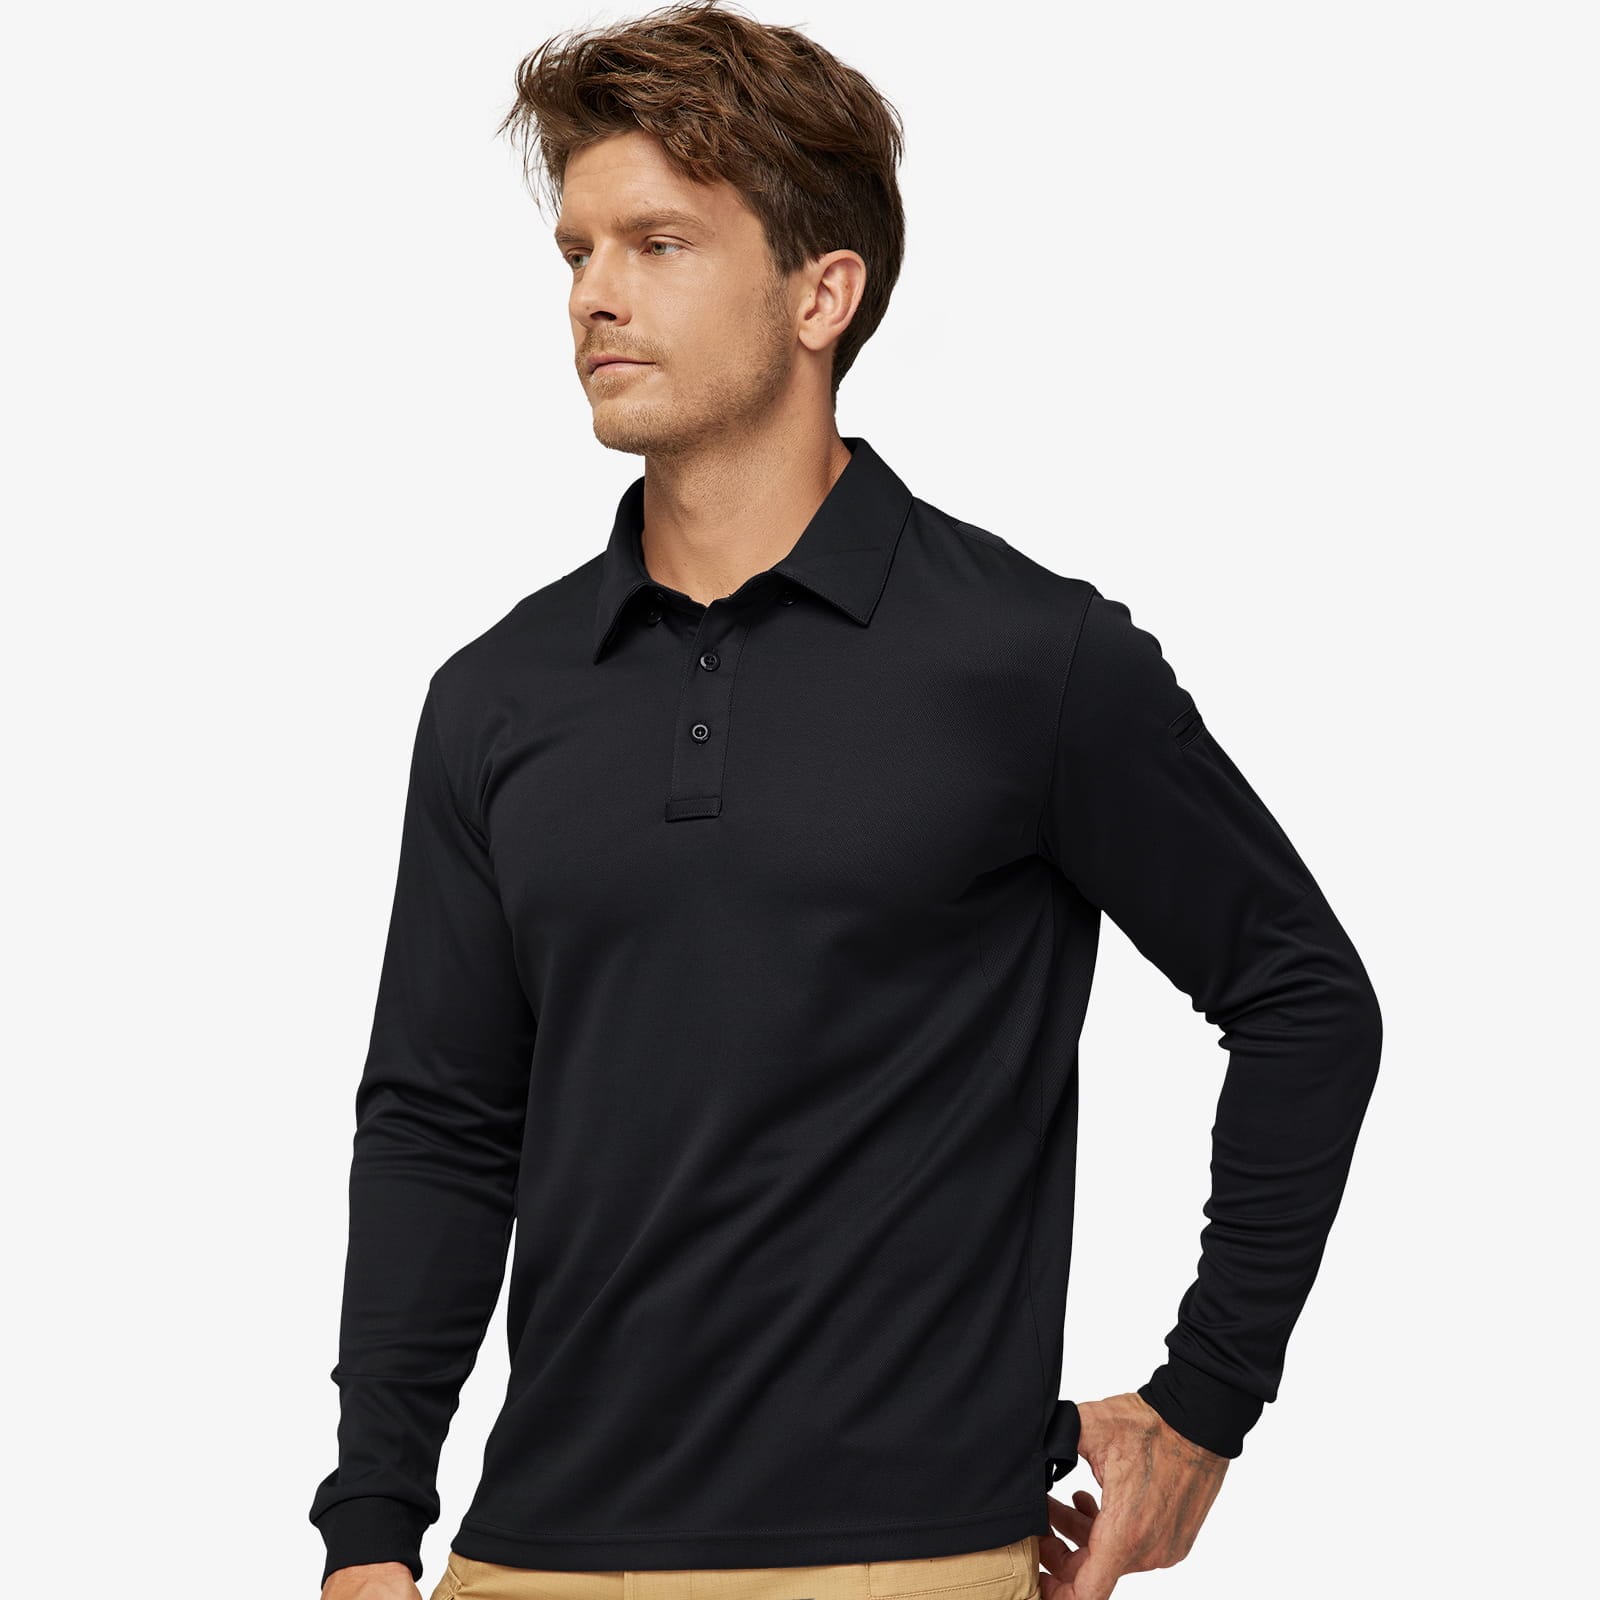 Men’s Long Sleeve T-Shirts - White - 100% Polyester